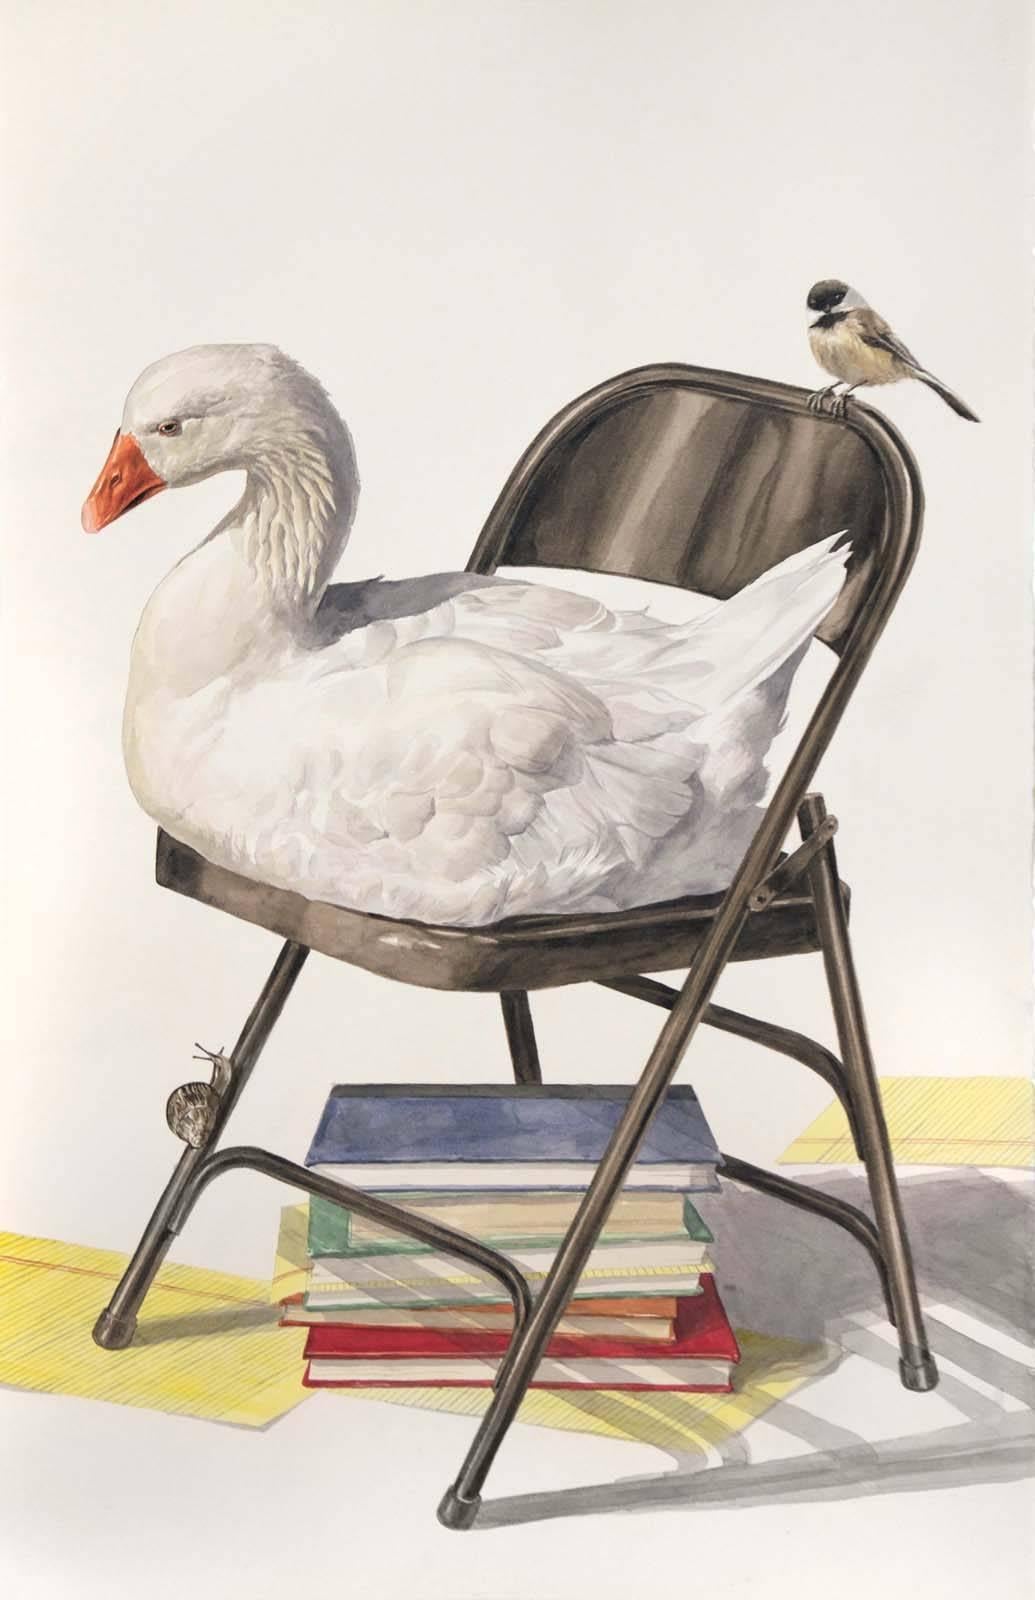 Thomas Broadbent Animal Art - Golden Goose